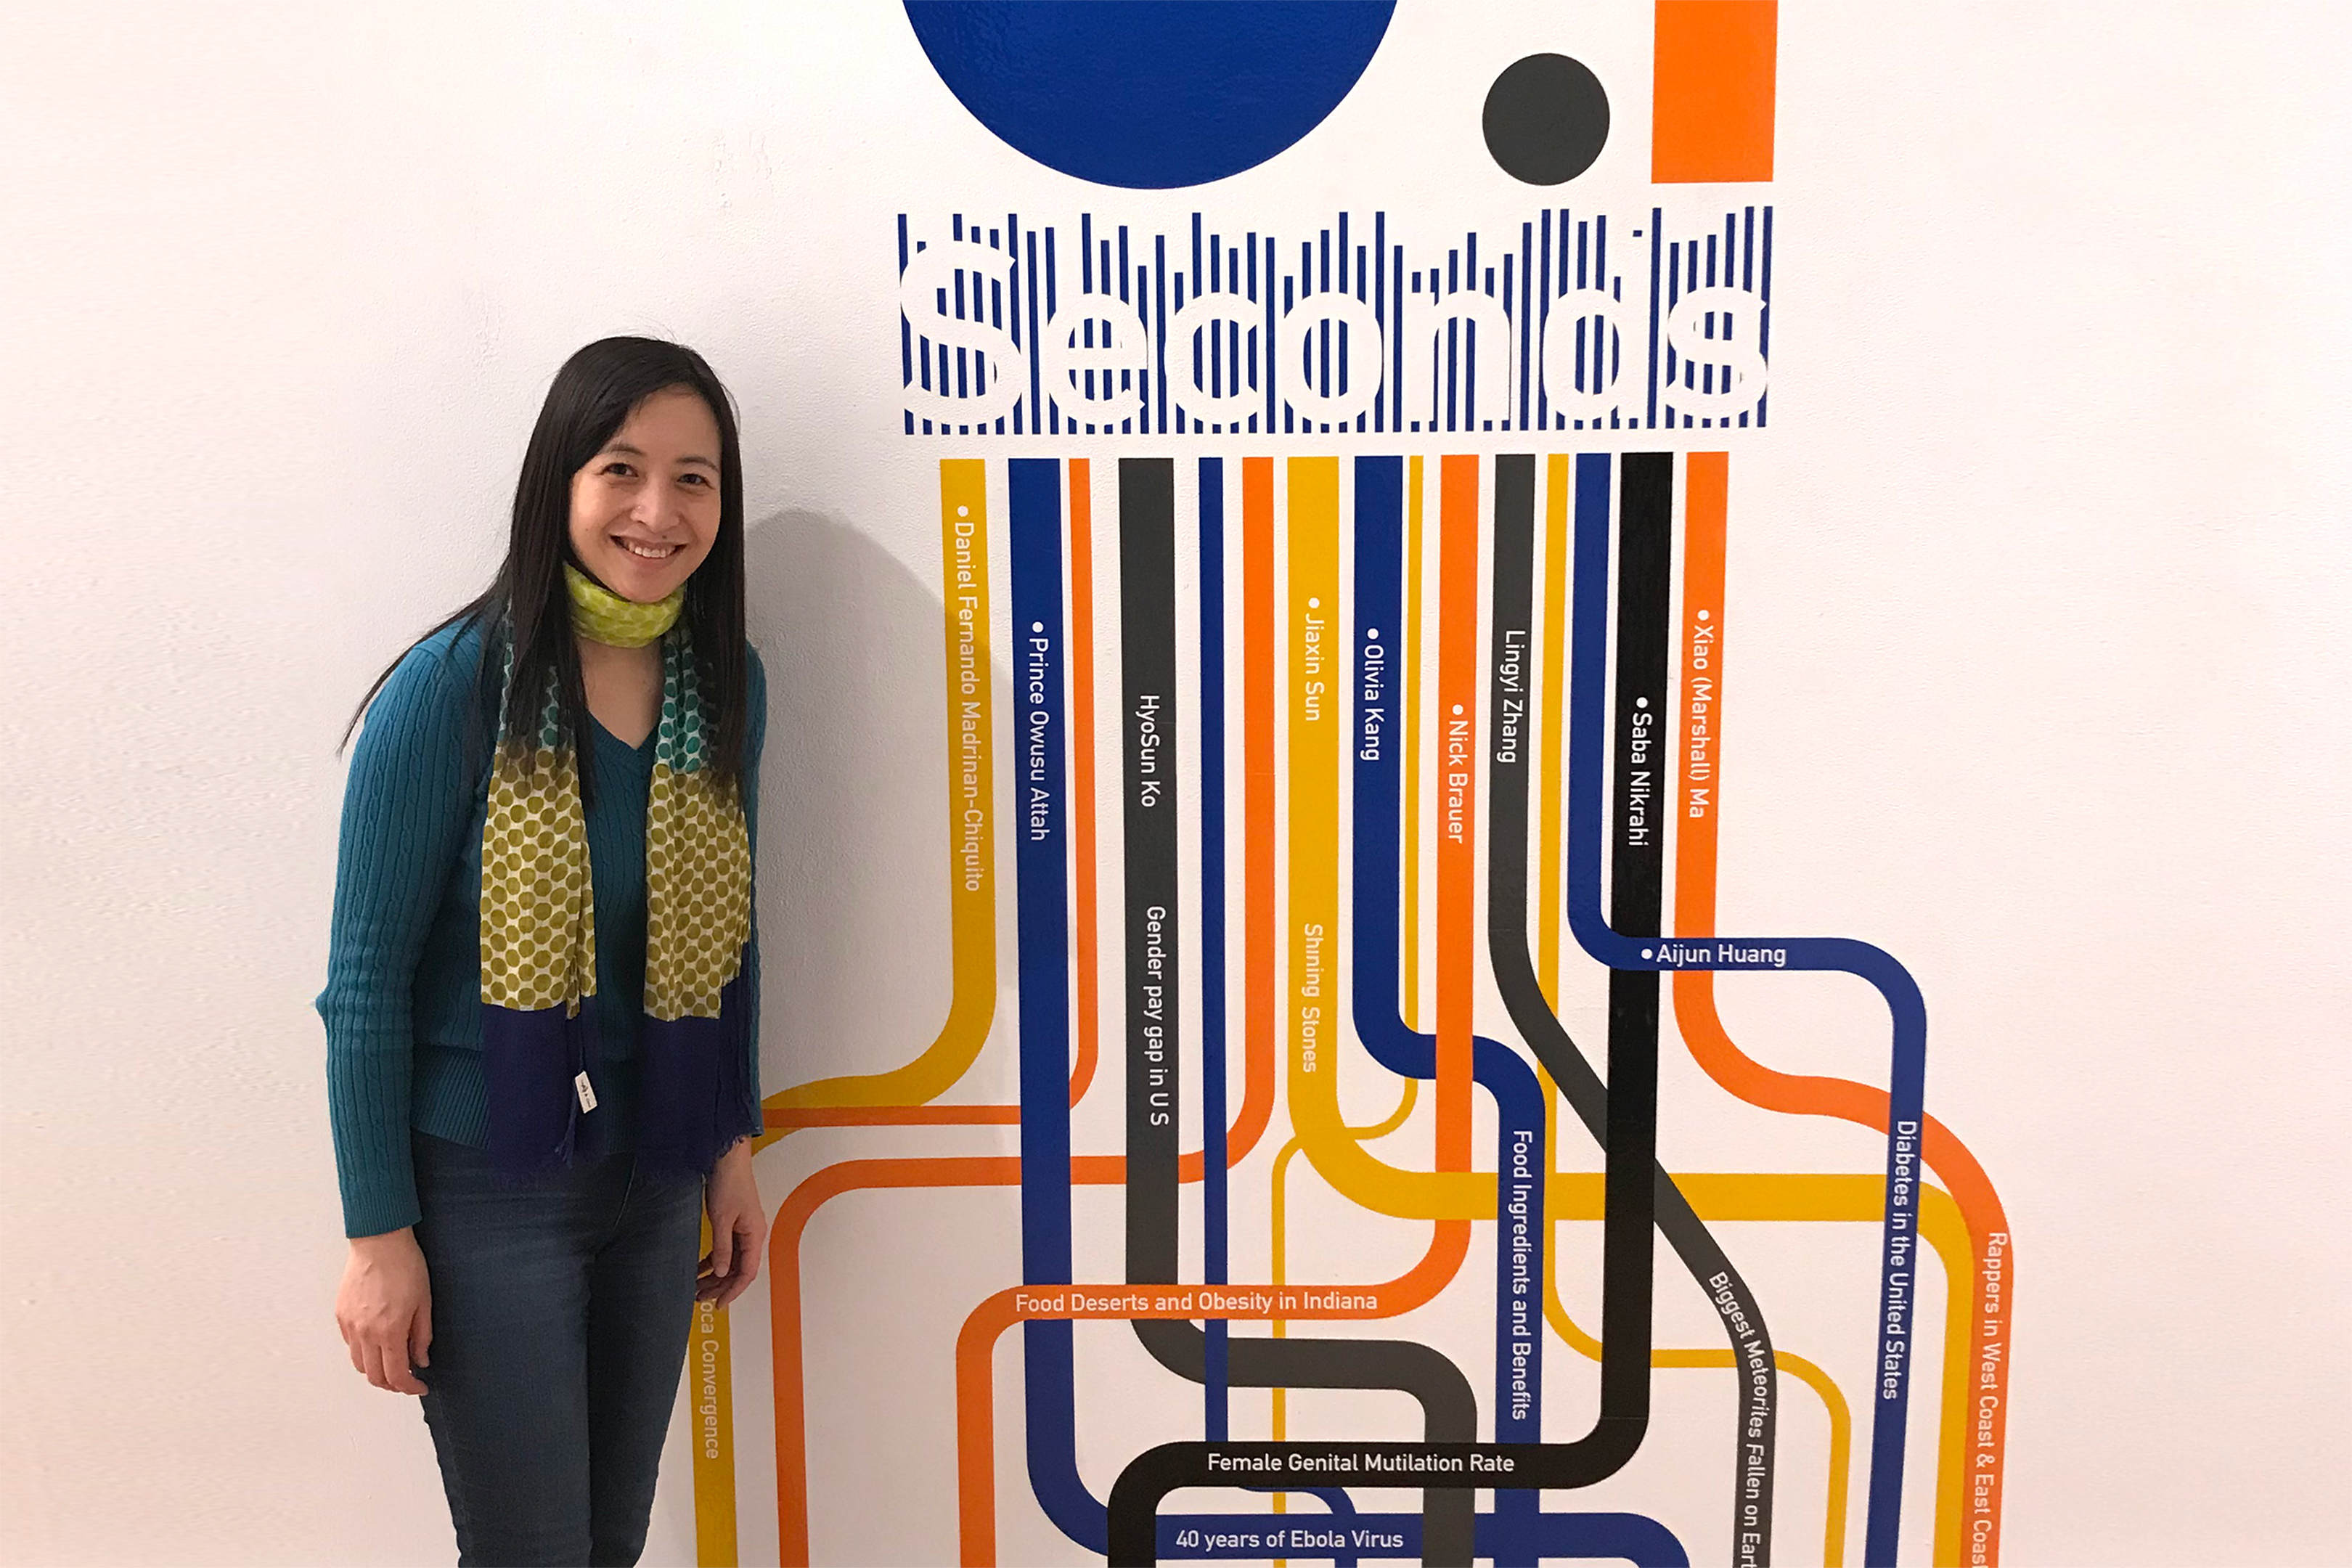 Cheryl Zhenyu Qian, Purdue, Industrial Design, Interaction Design